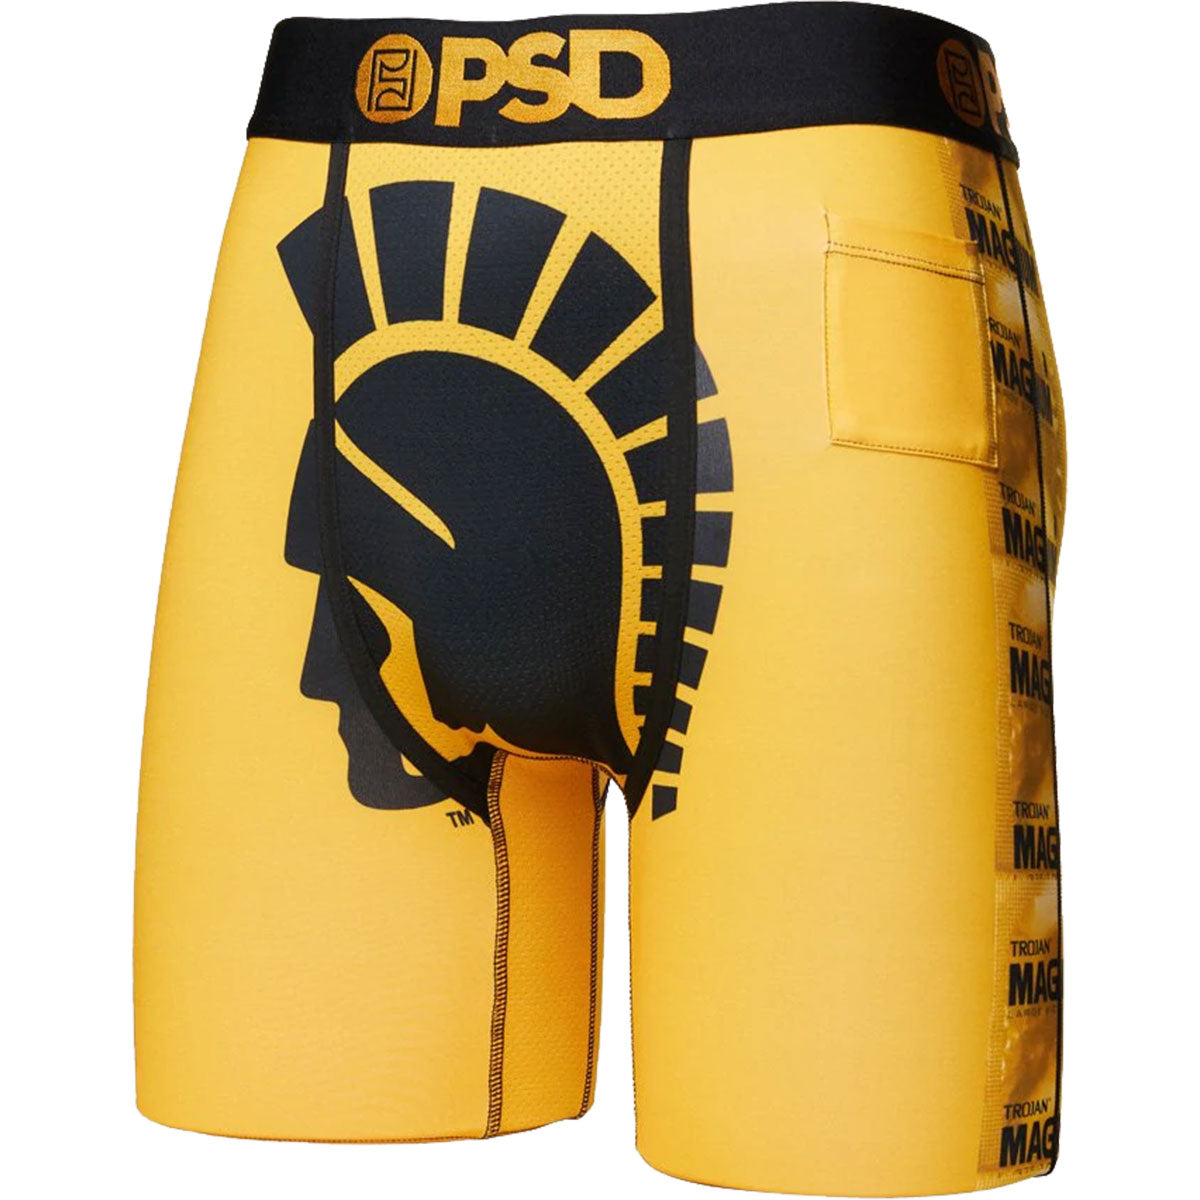 PSD Trojan Man Boxer Men's Bottom Underwear-421180023